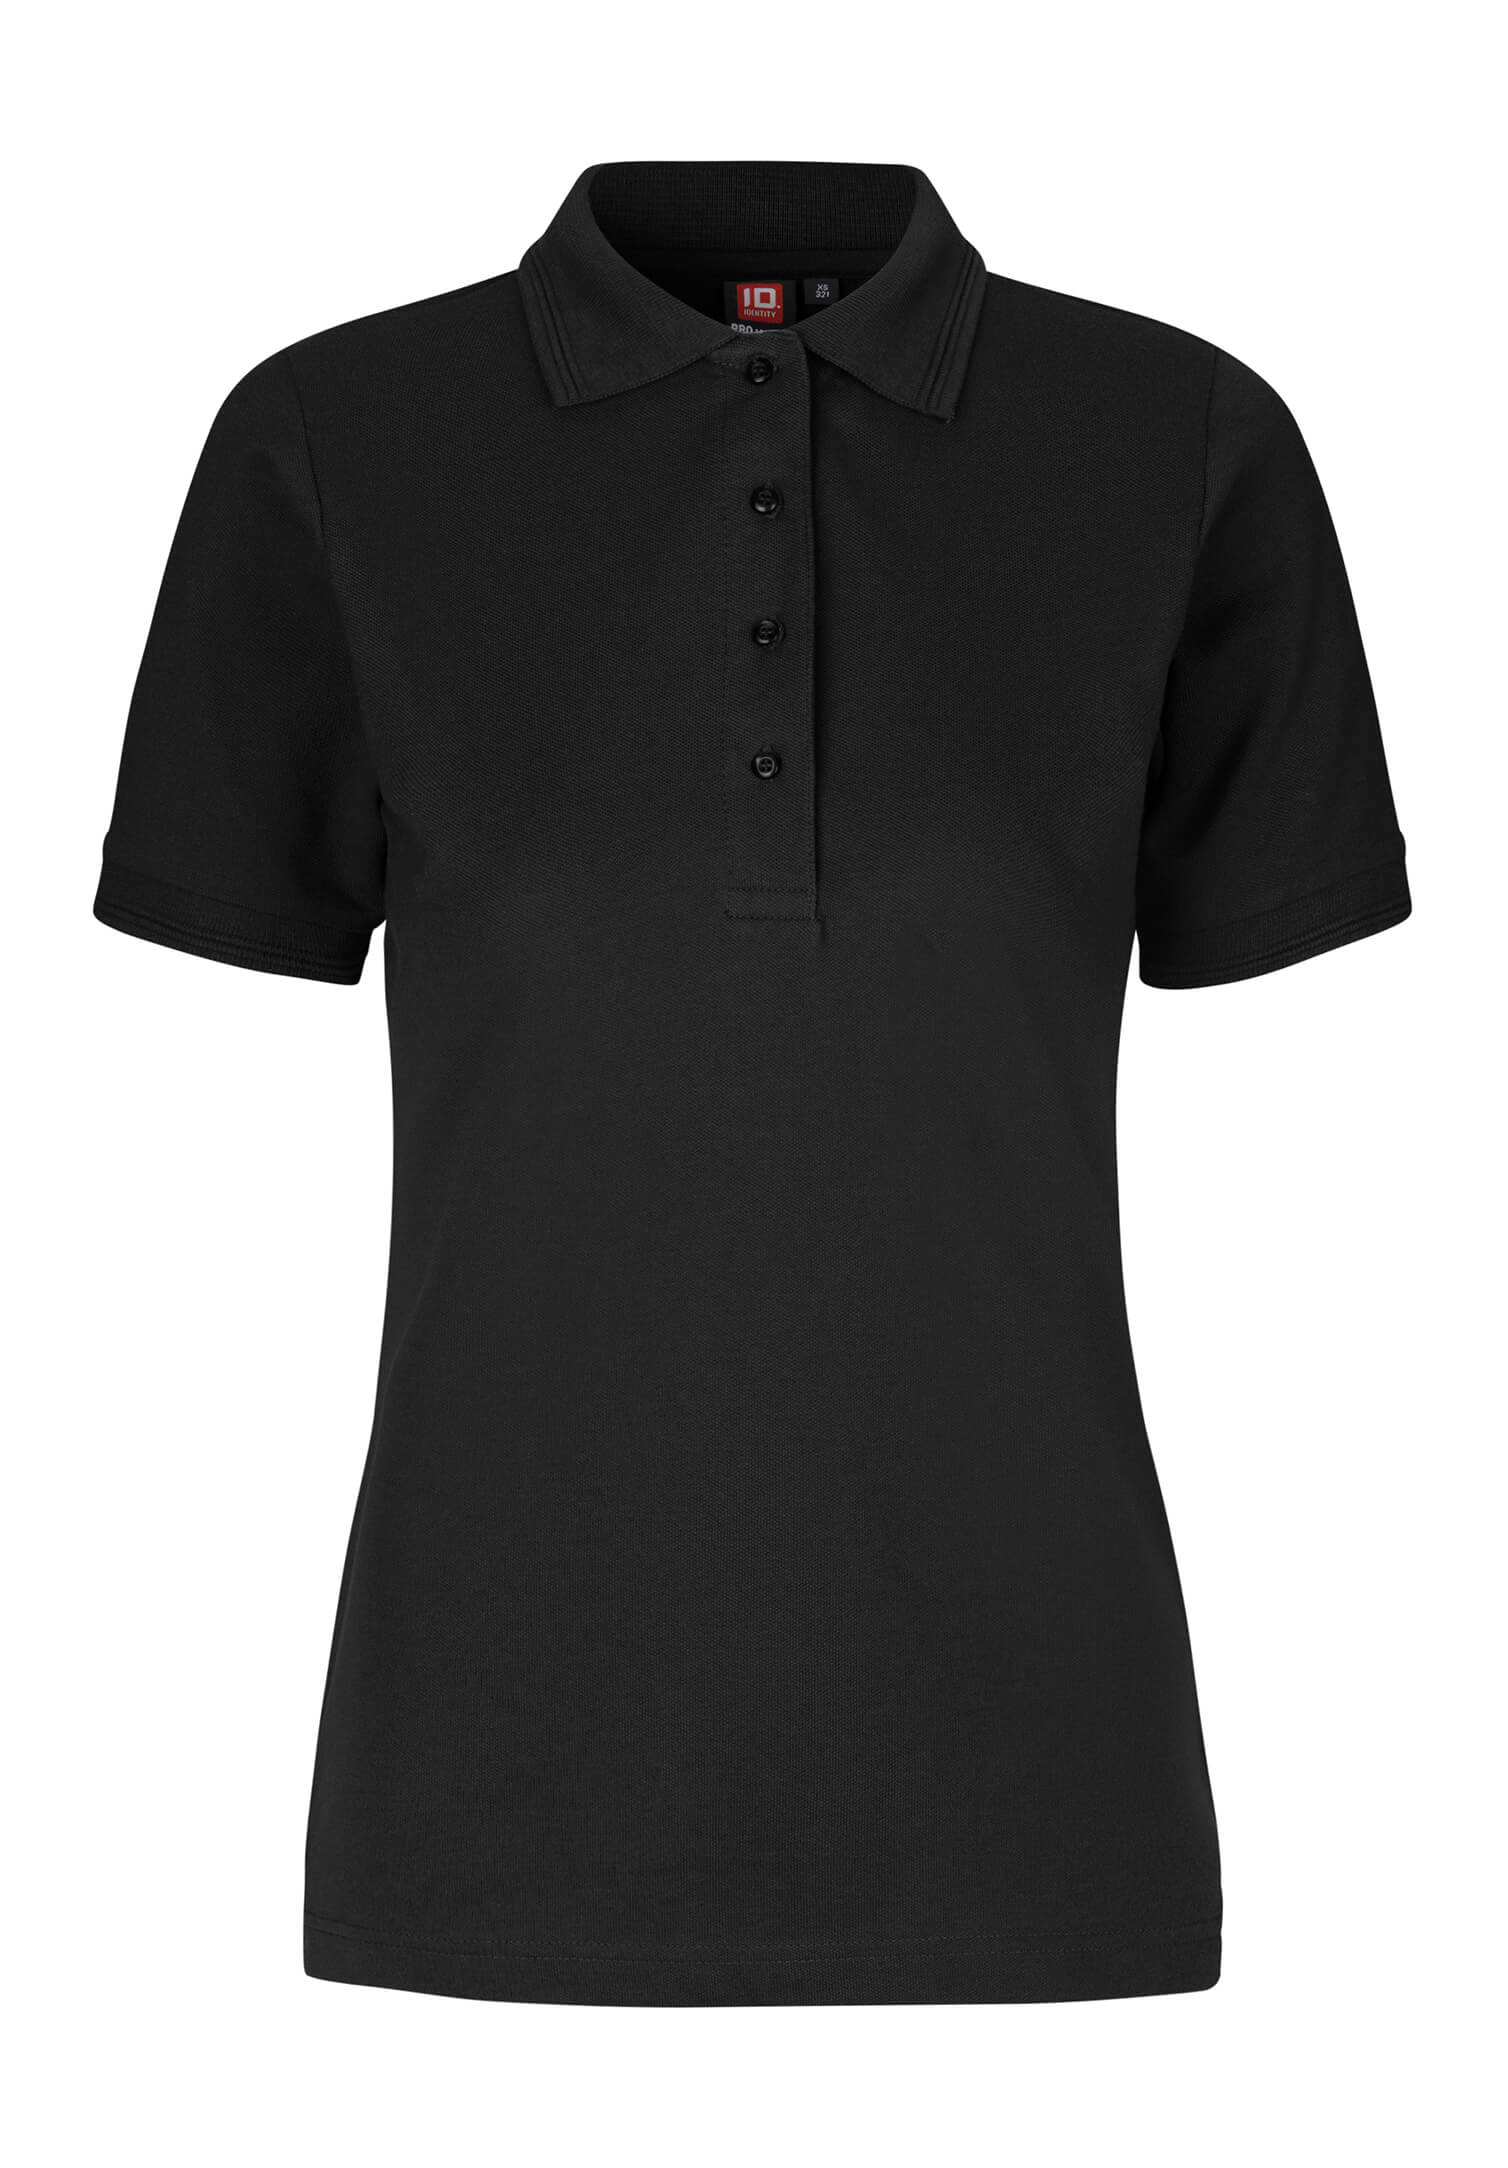 Damen Poloshirt - schwarz - S